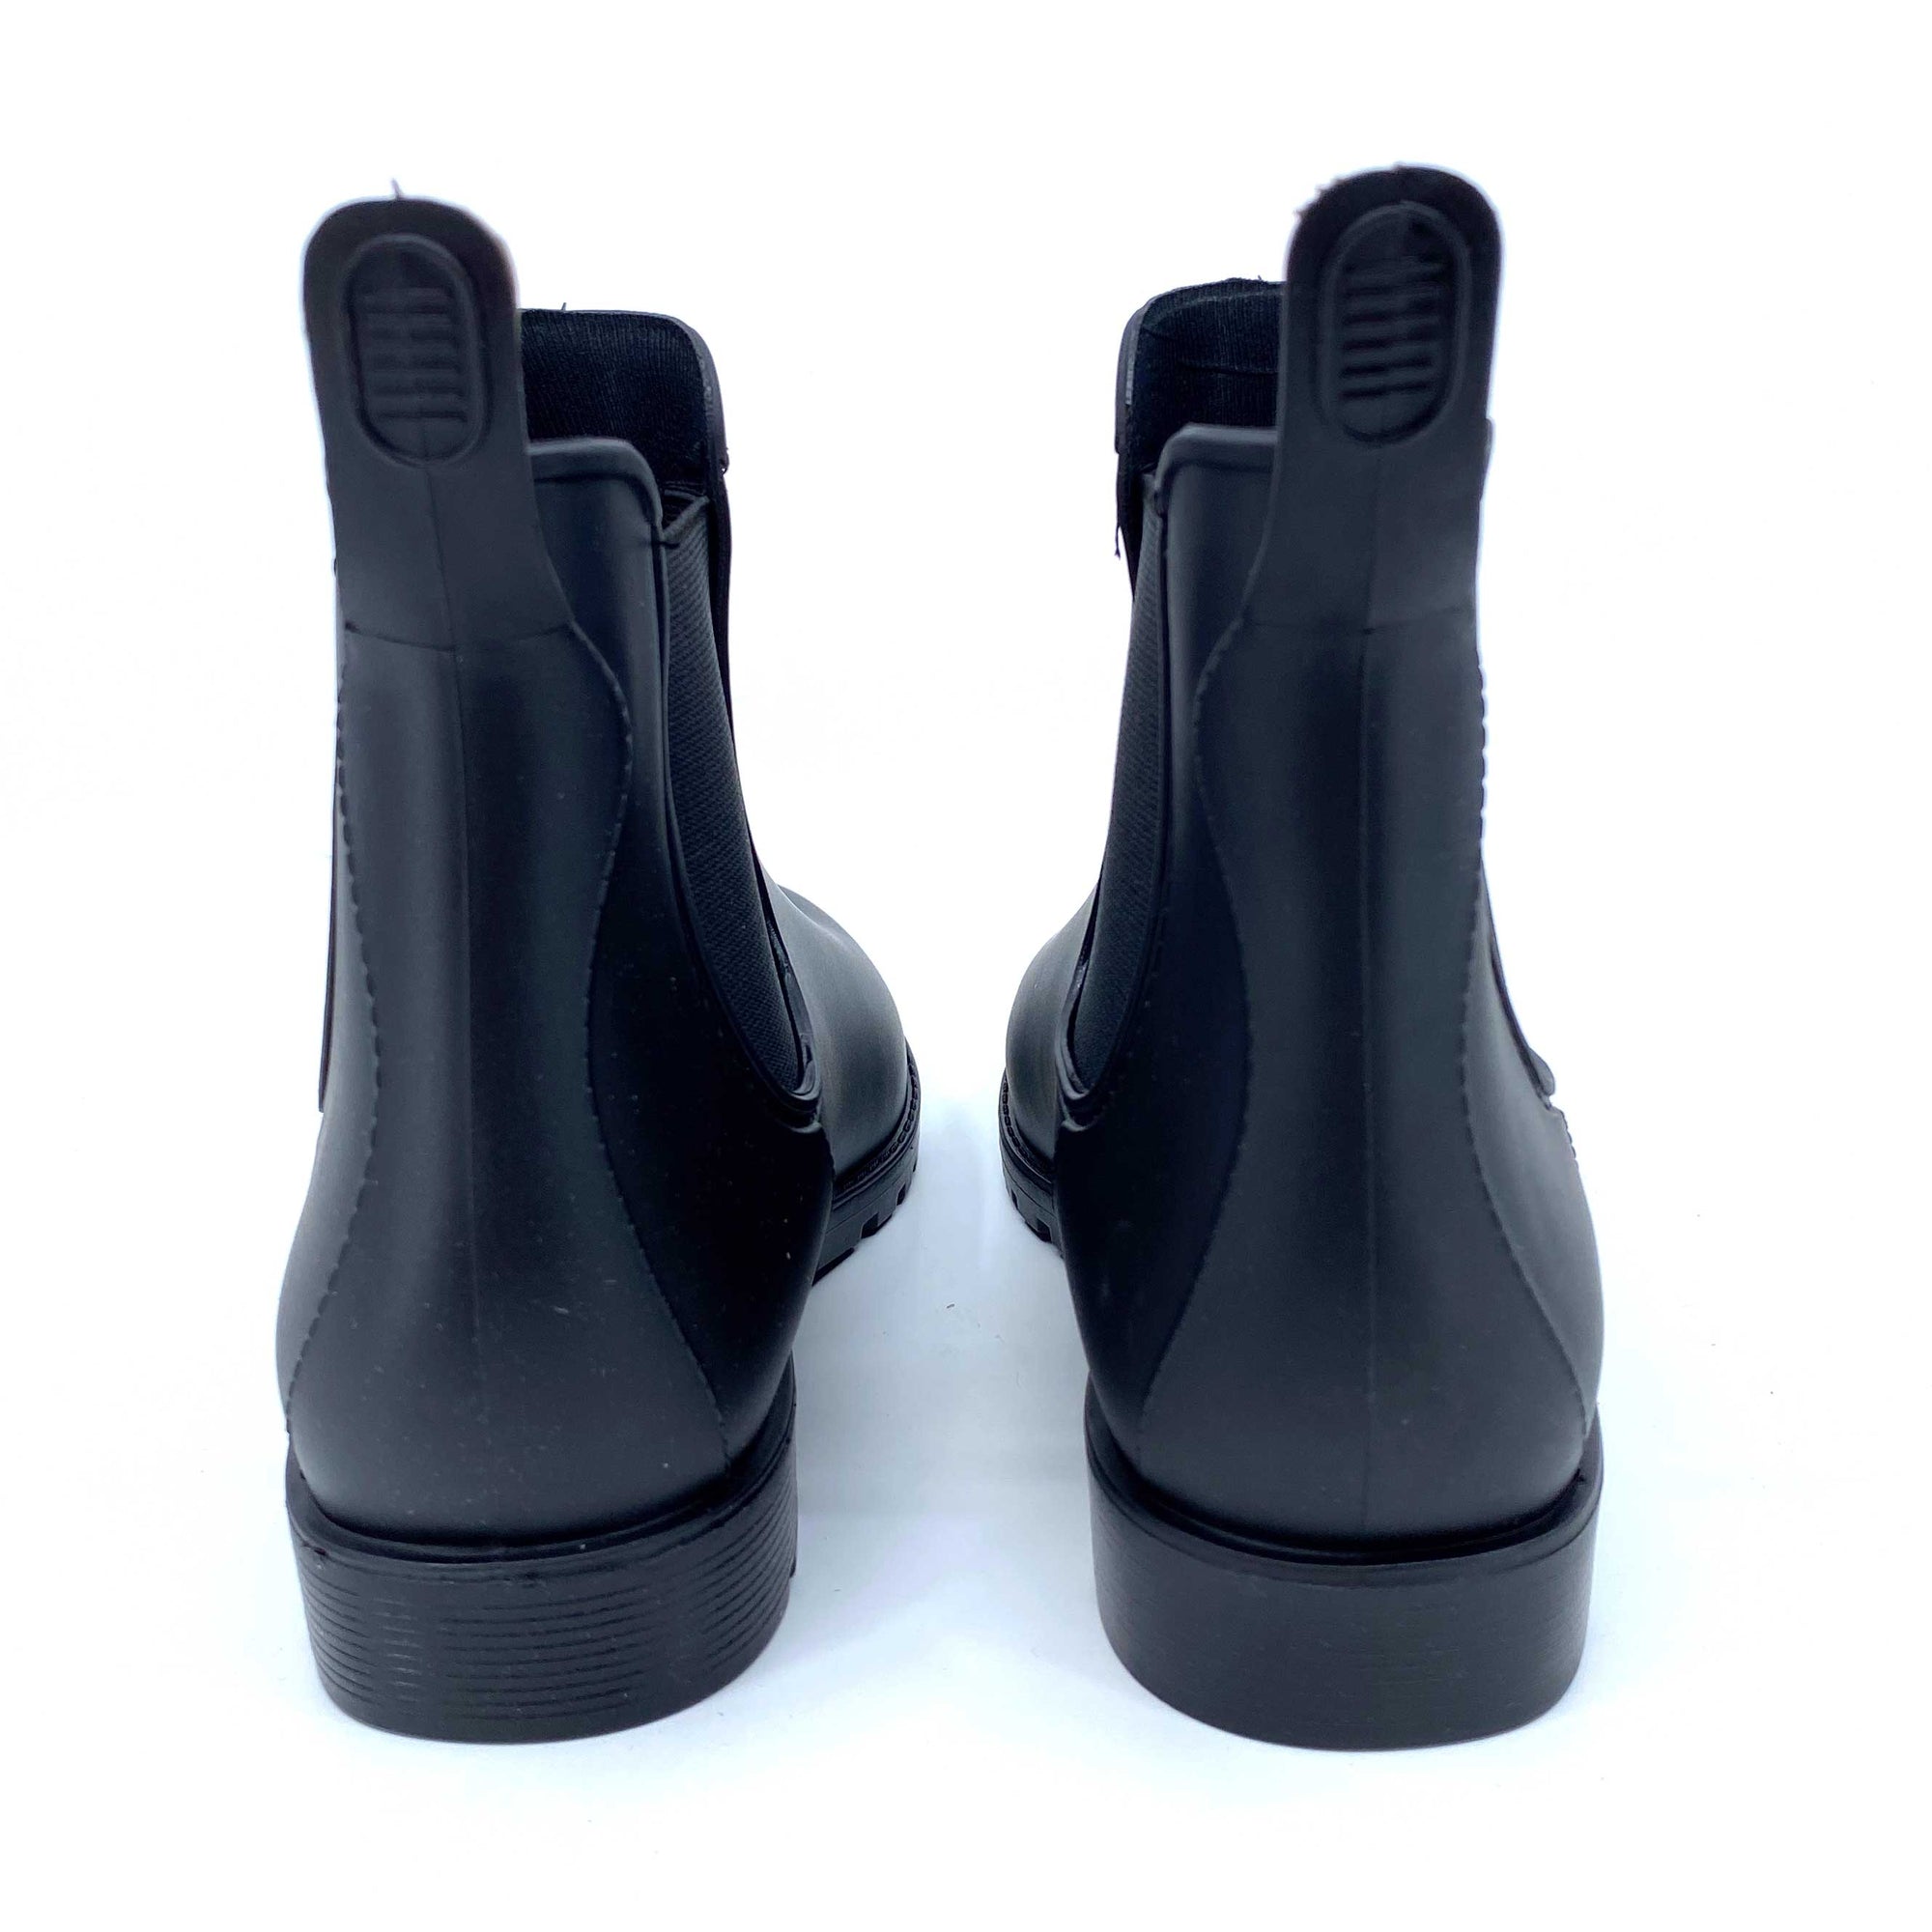 Adele Black Ankle Rain Boots PVC